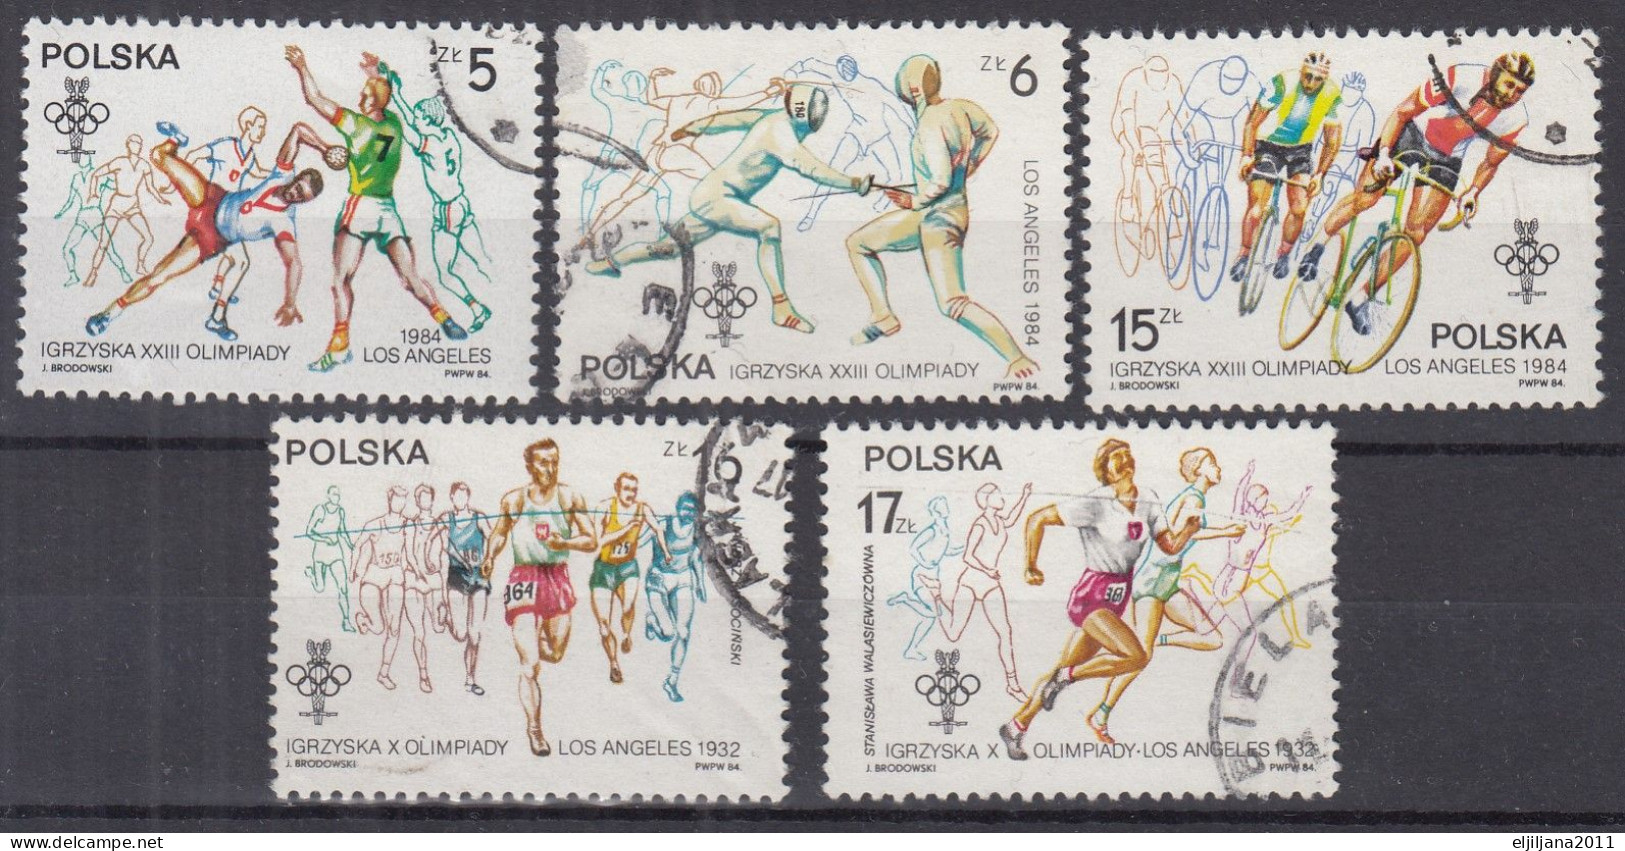 ⁕ Poland / Polska 1984 ⁕ Olympic Games Mi.2913-2917 (missing 2118) ⁕ 5v Used - Used Stamps